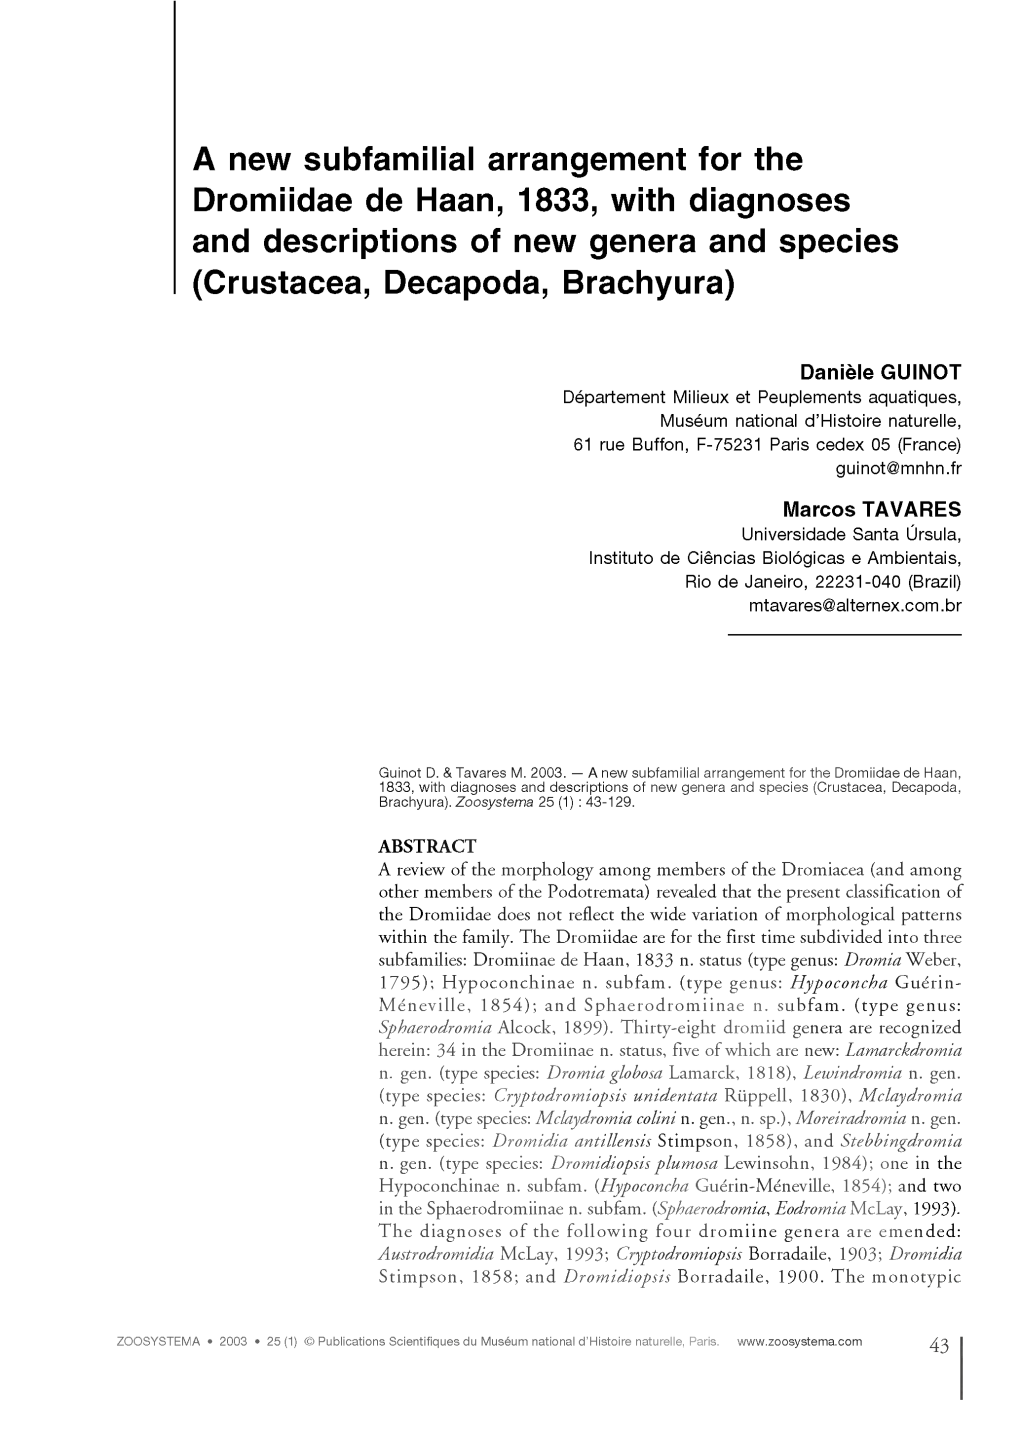 A New Subfamilial Arrangement for the Dromiidae De Haan, 1833, with Diagnoses and Descriptions of New Genera and Species (Crustacea, Decapoda, Brachyura)